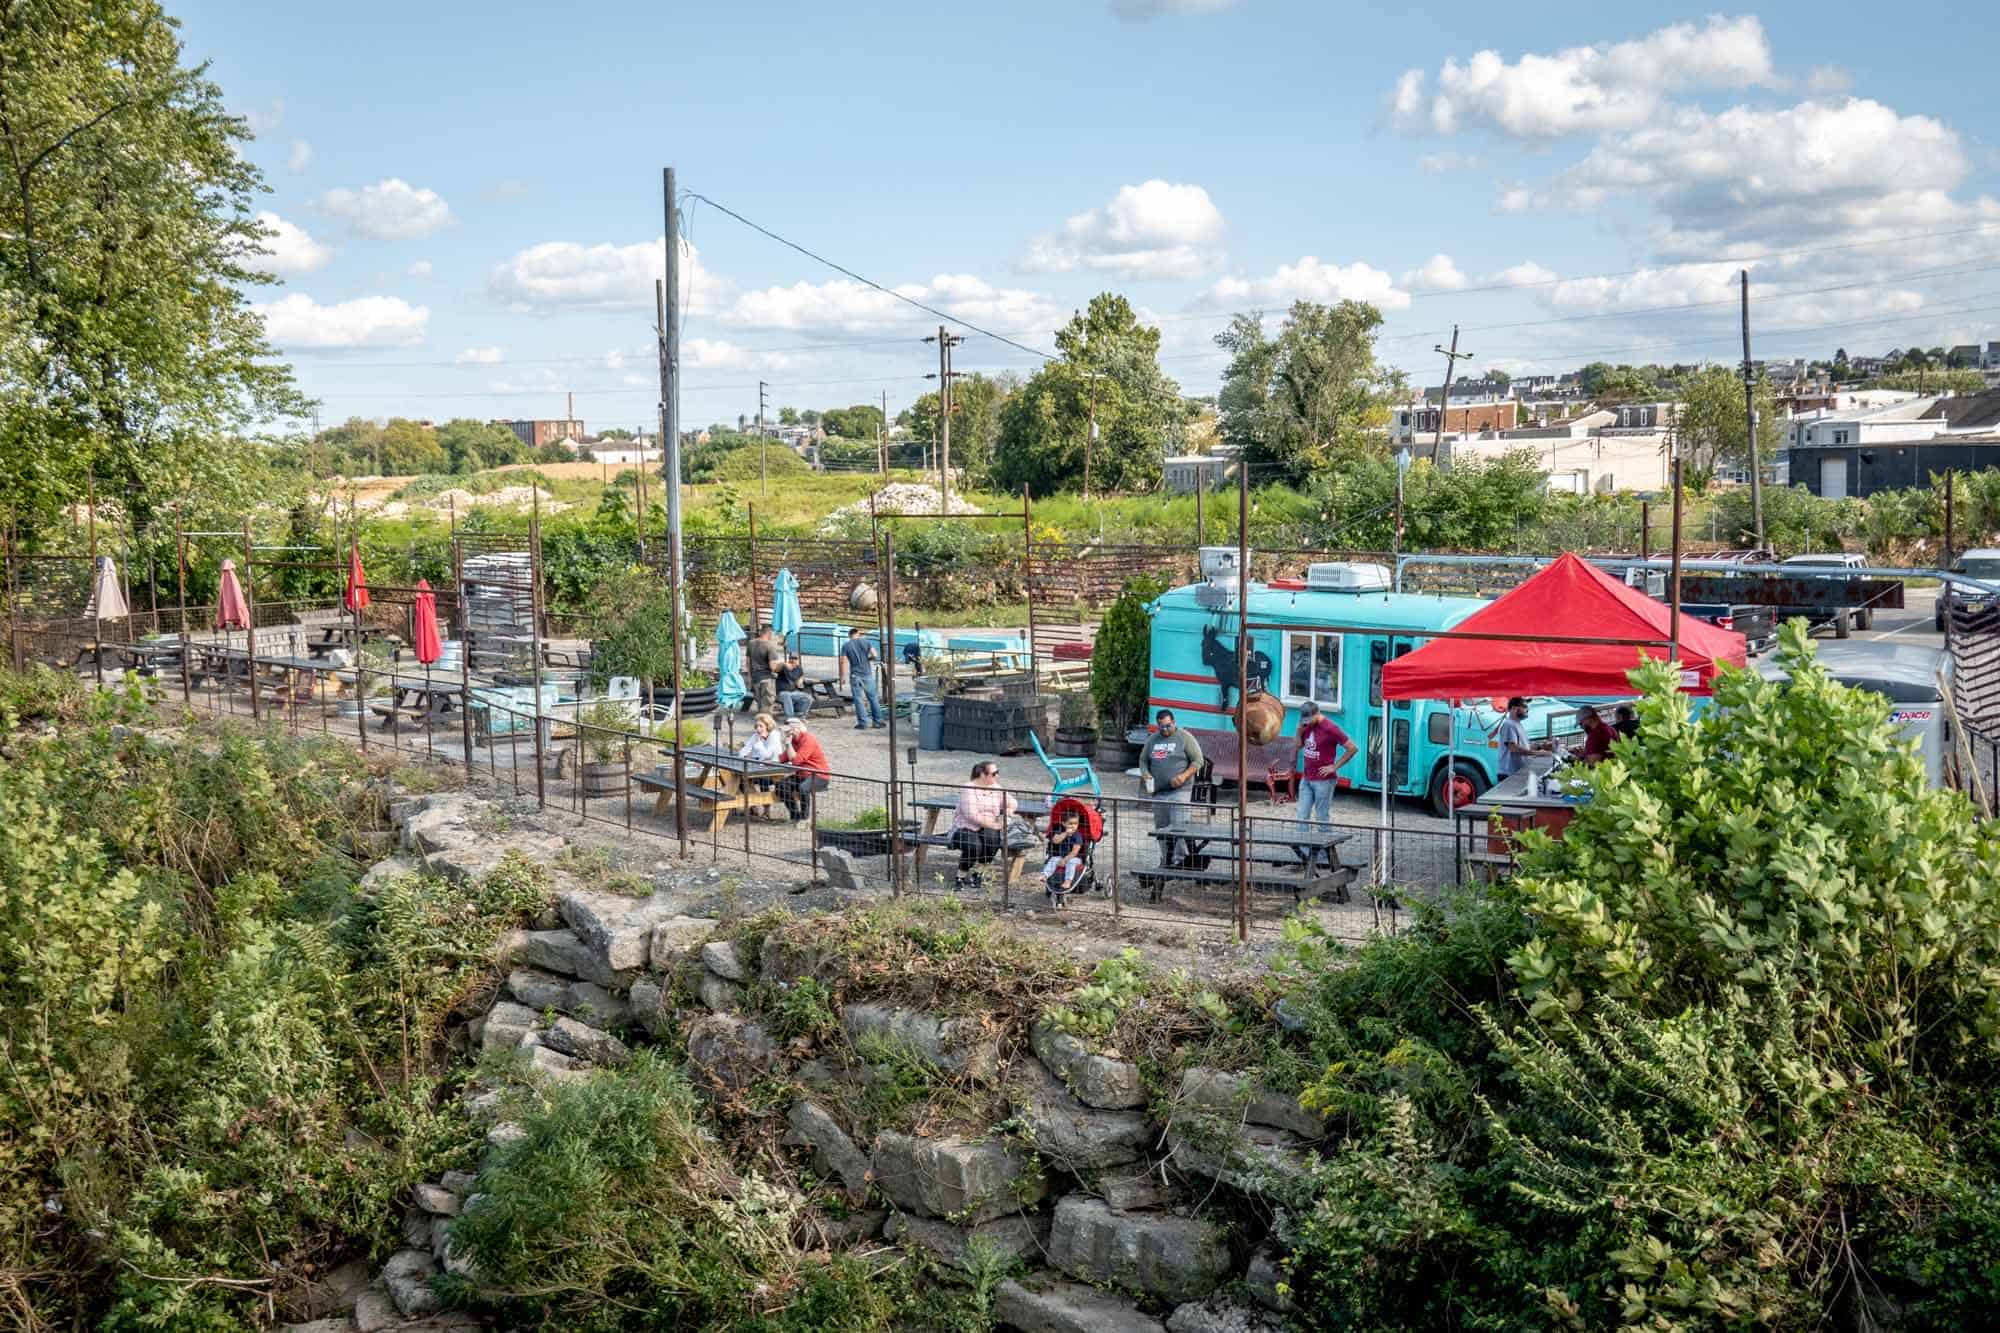 People in outdoor beer garden with bright blue mini-bus